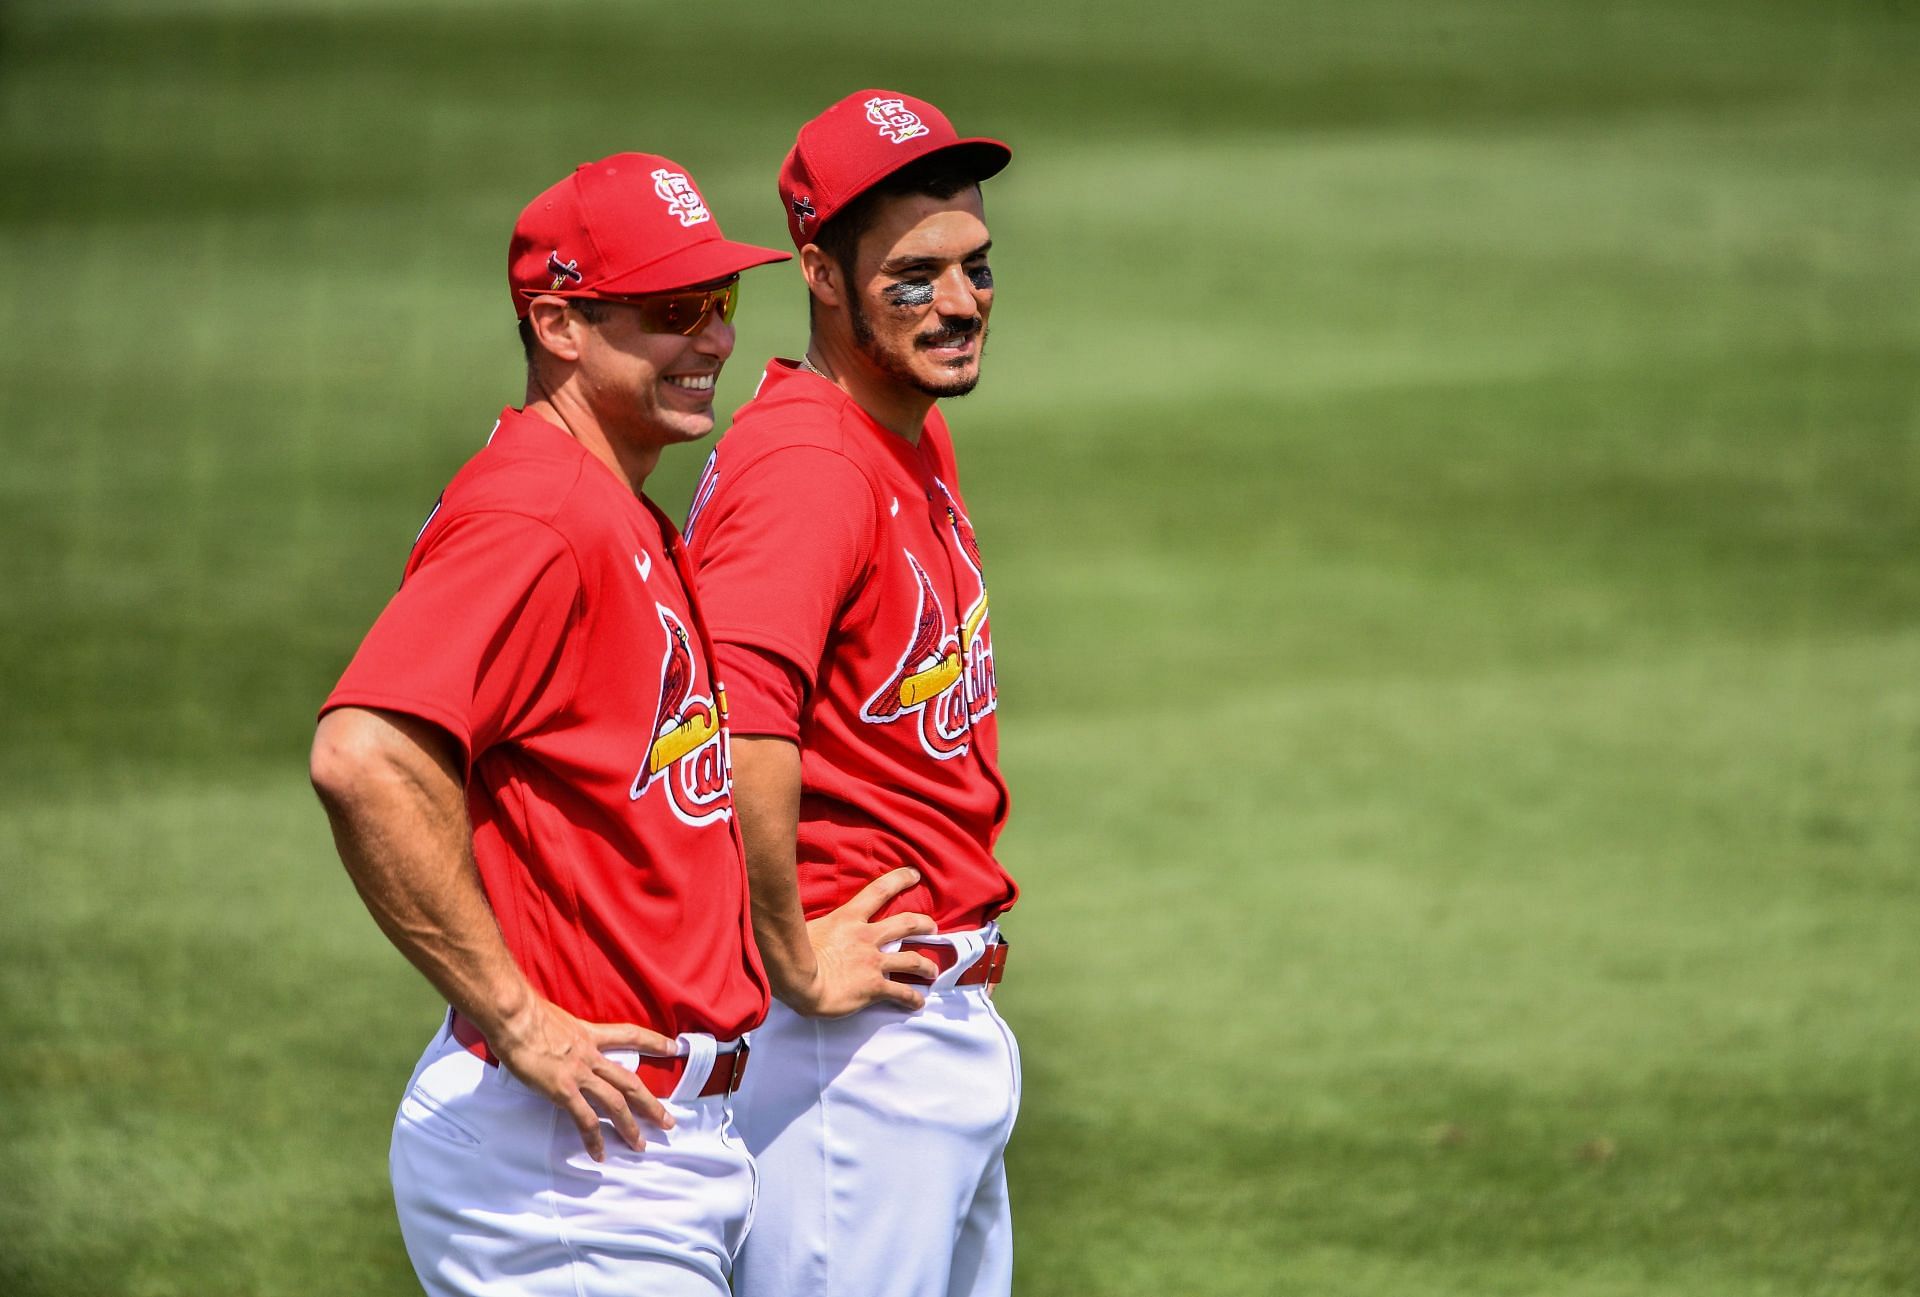 Paul Goldschmidt, left, and Nolan Arenado of the St. Louis Cardinals